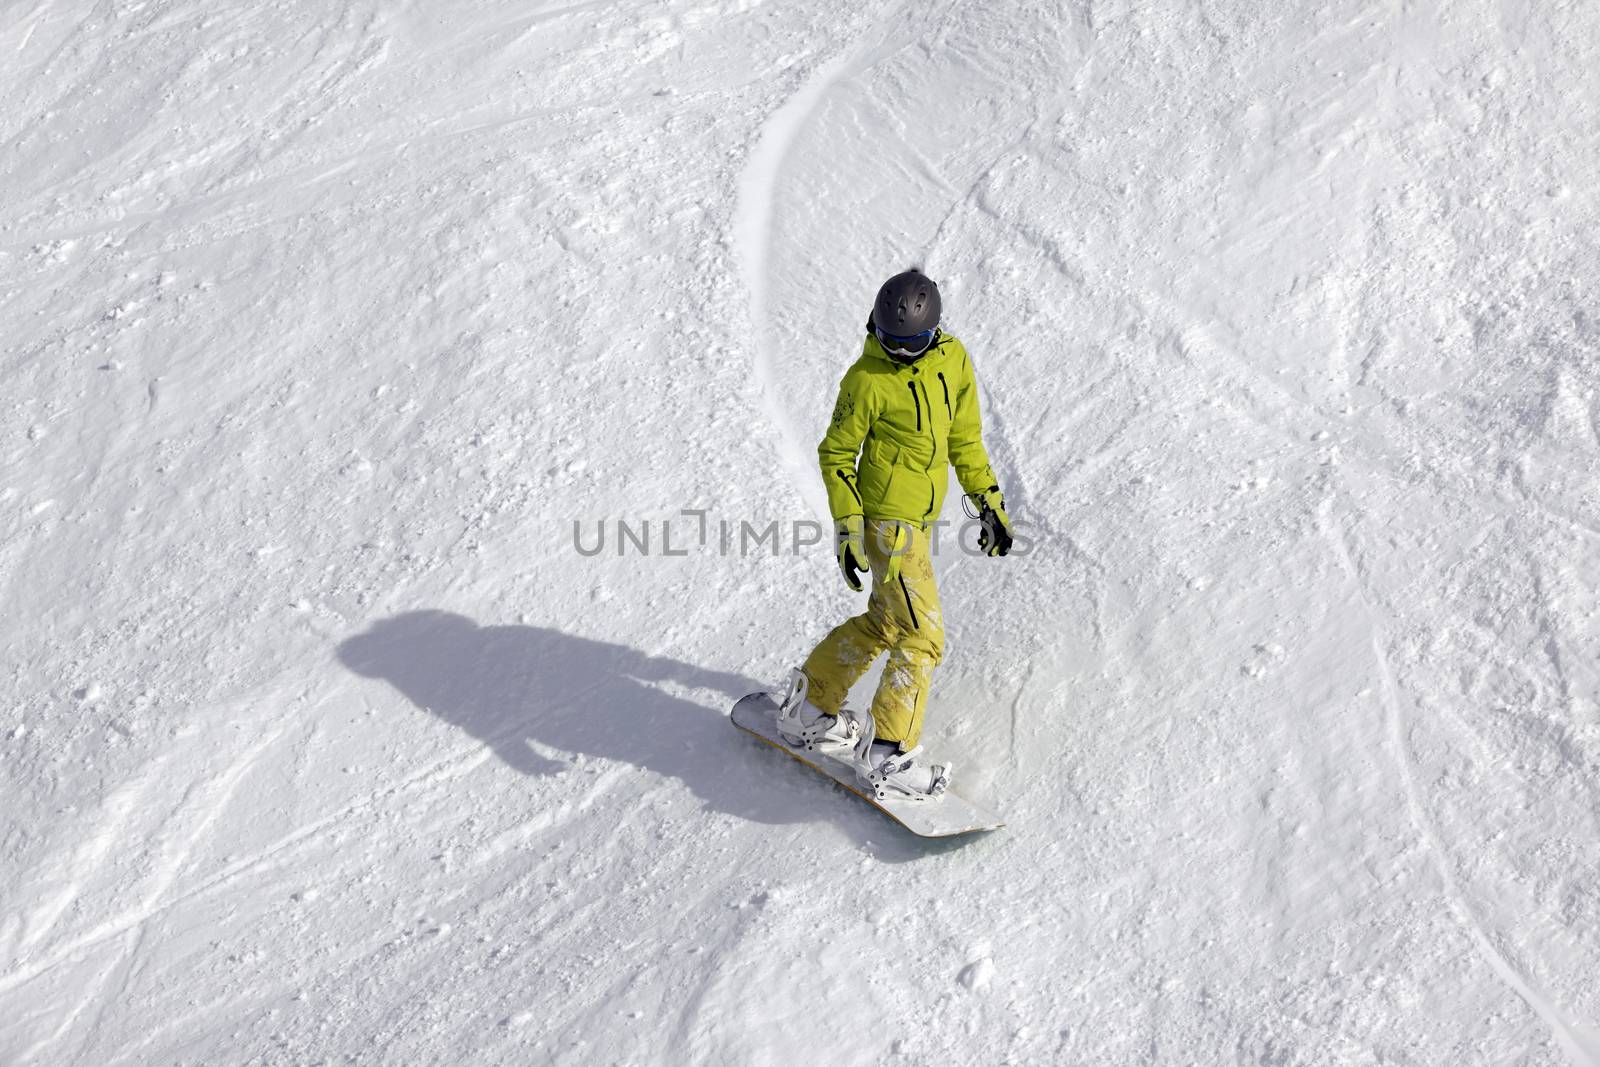 Snowboarder riding fresh powder snow